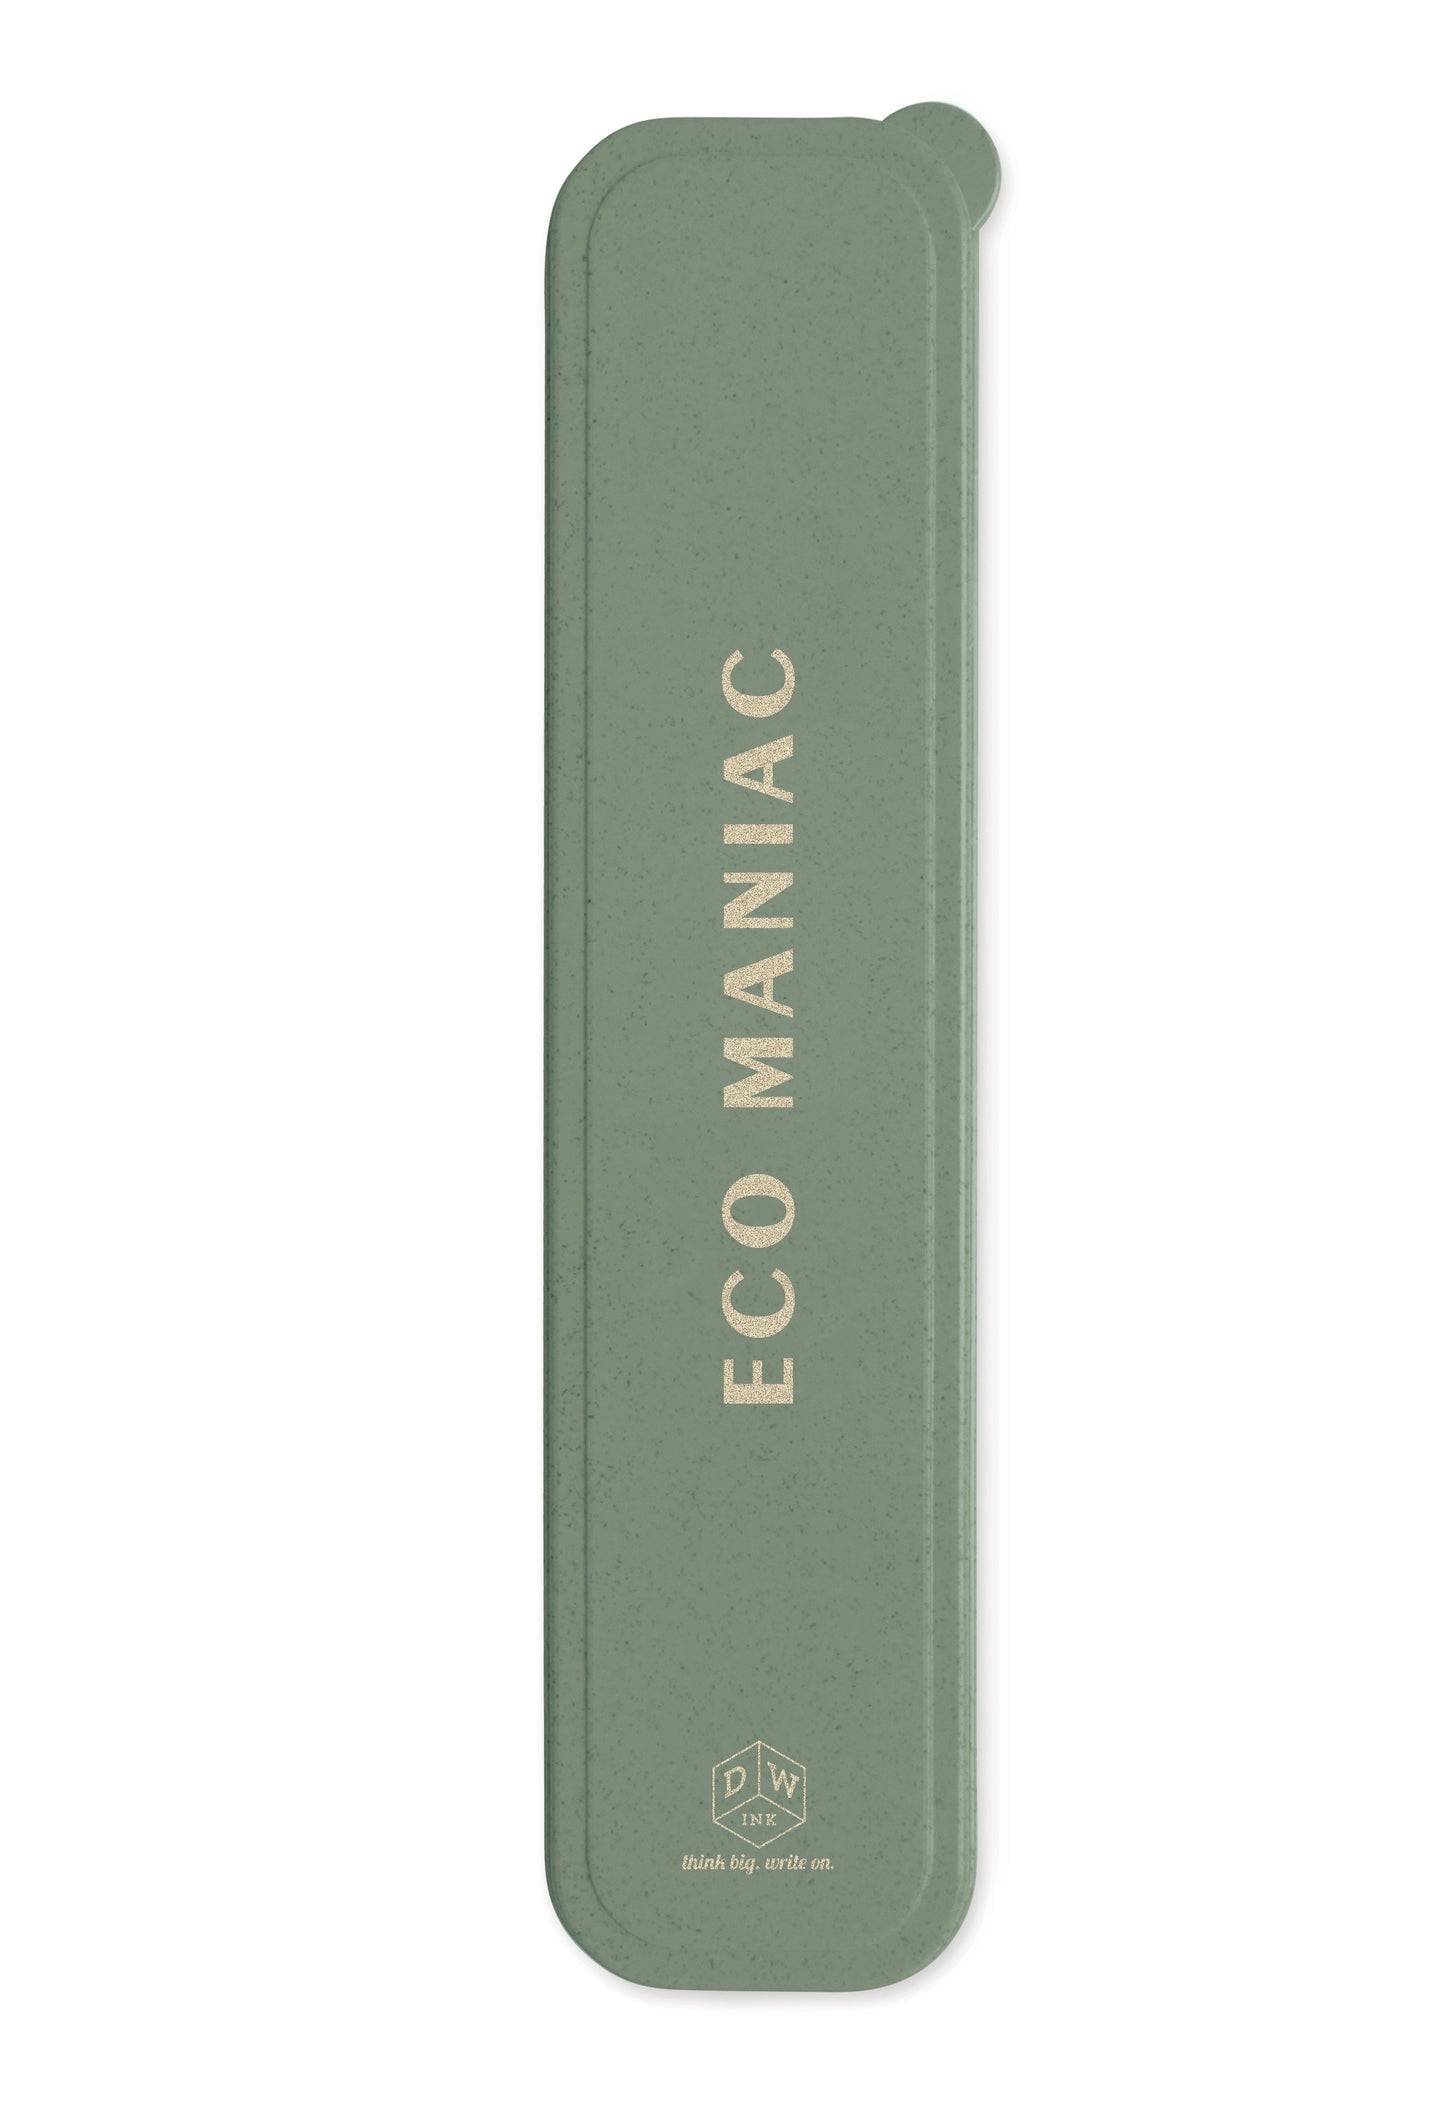 Portable Flatware Set - "Eco Maniac"